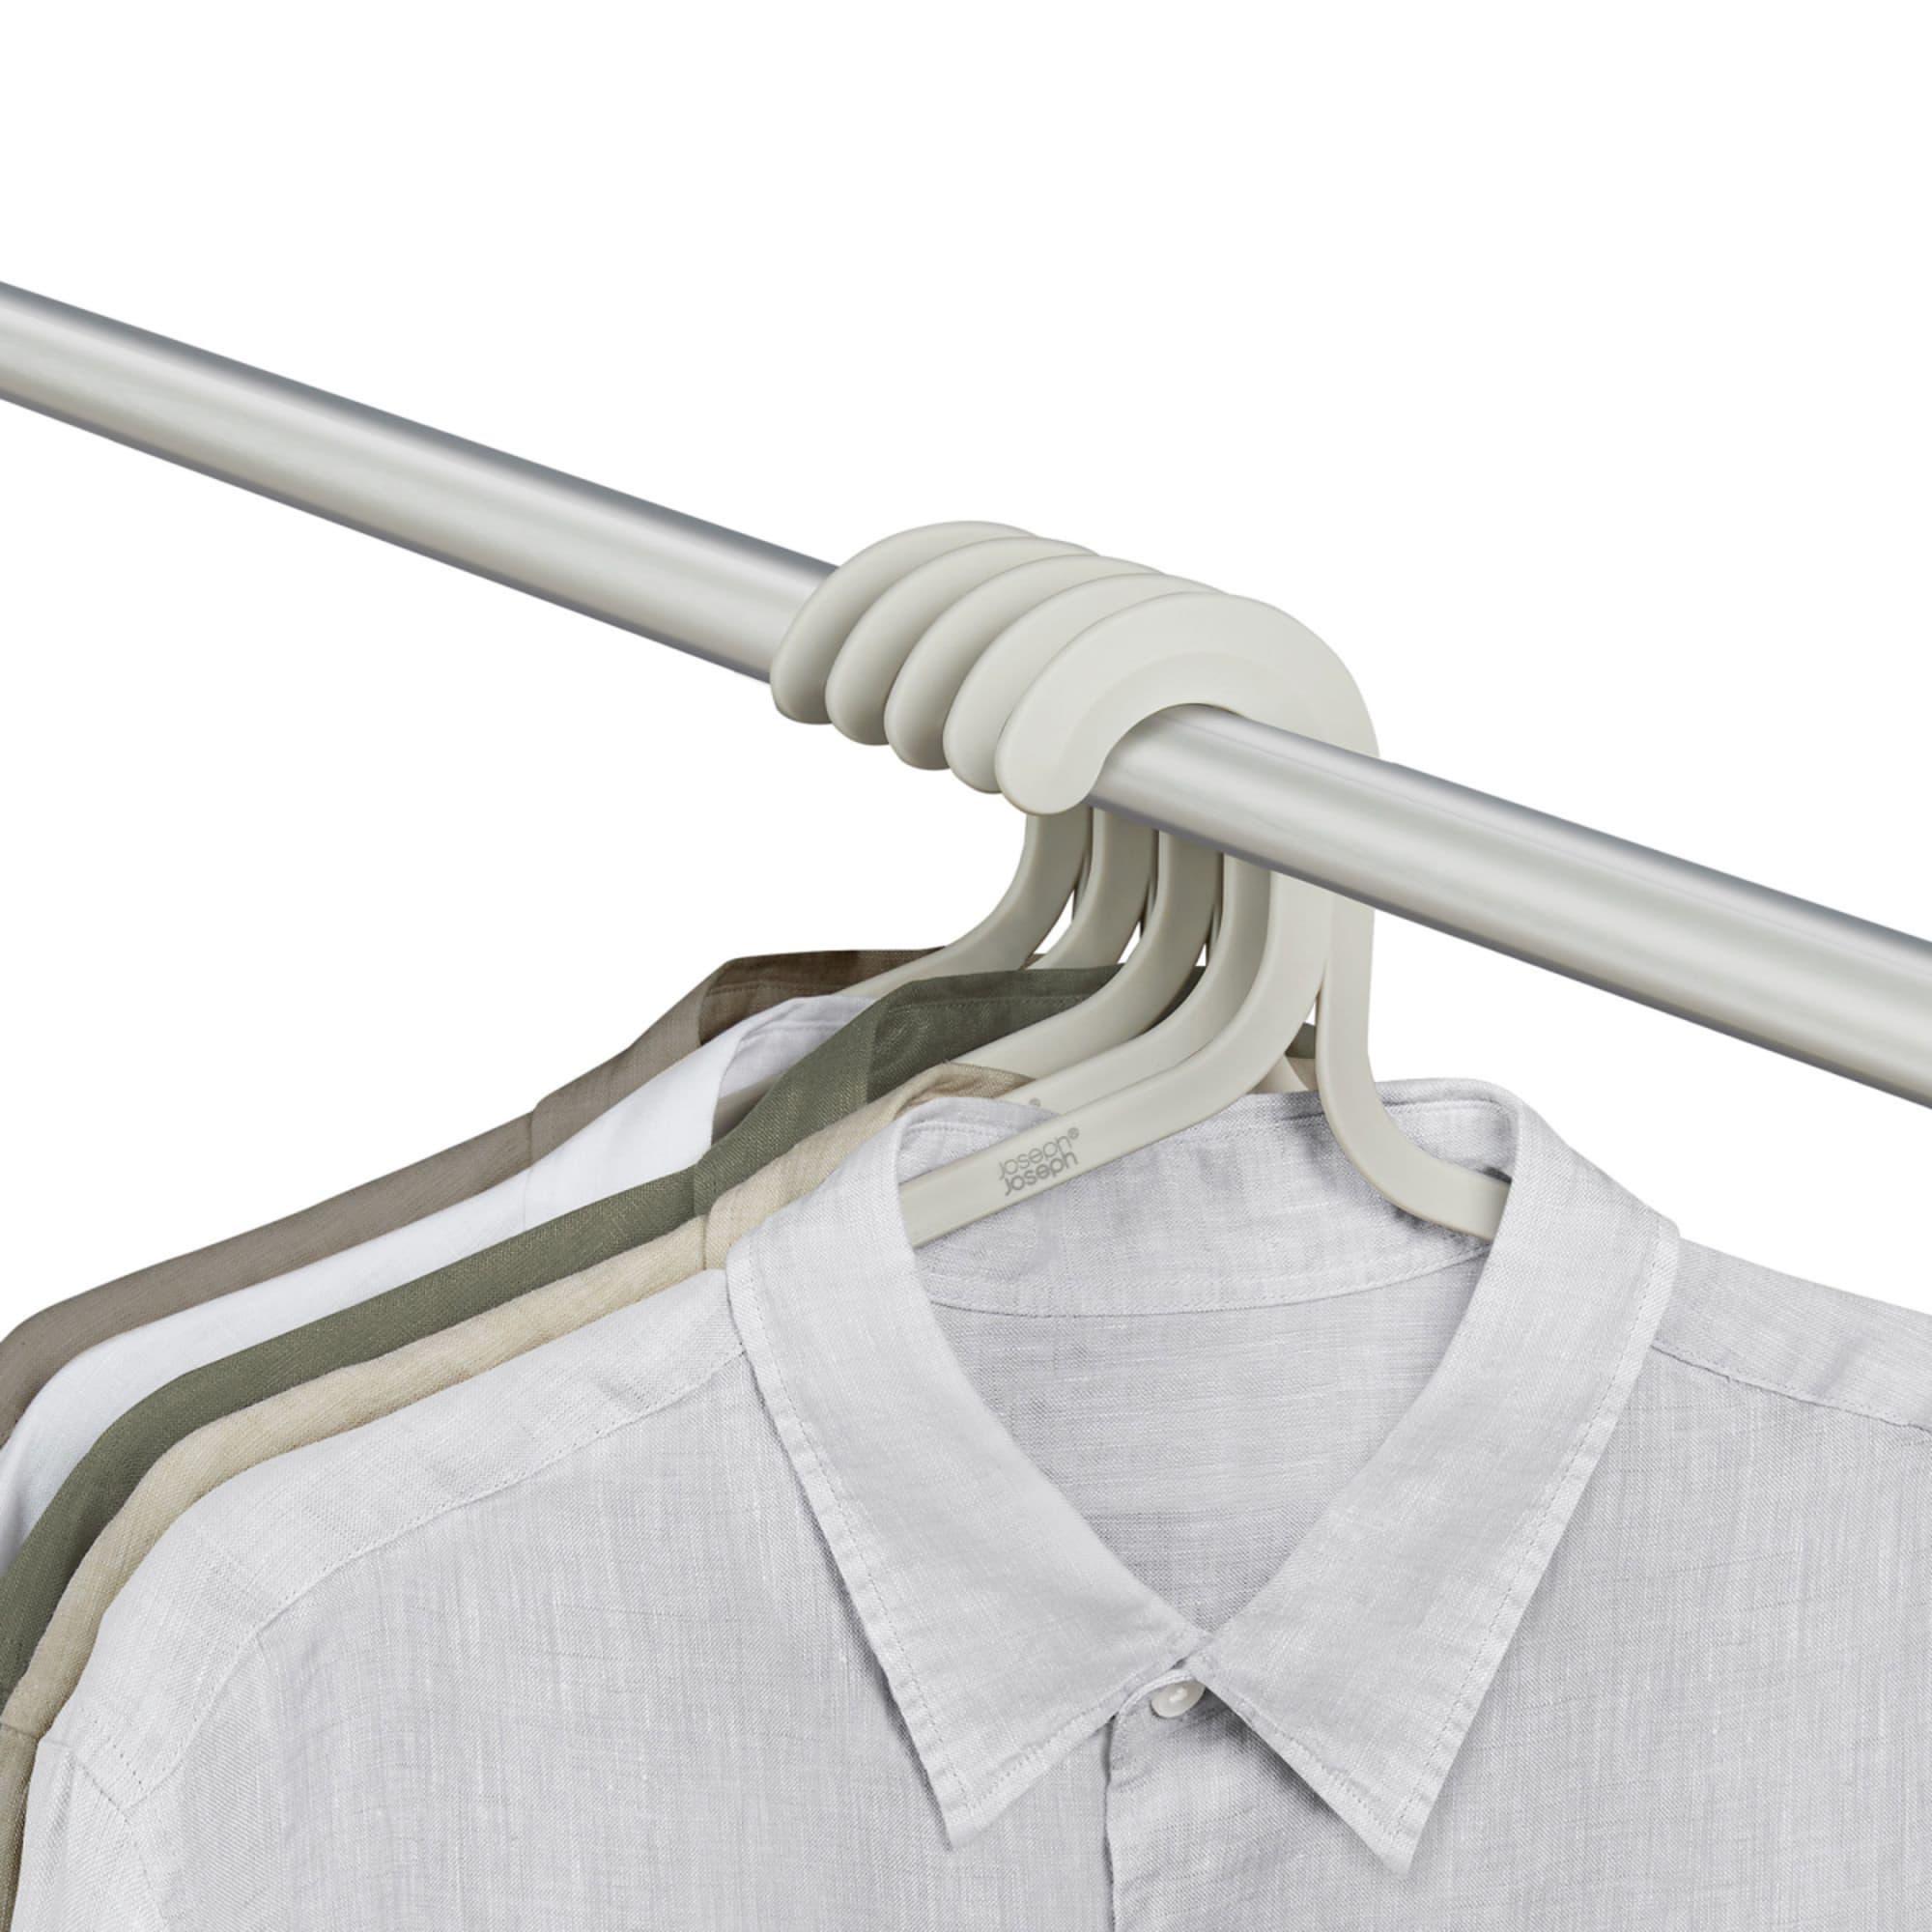 Joseph Joseph Orderly Anti Tangle Clothes Hanger Set of 5 Ecru Image 8